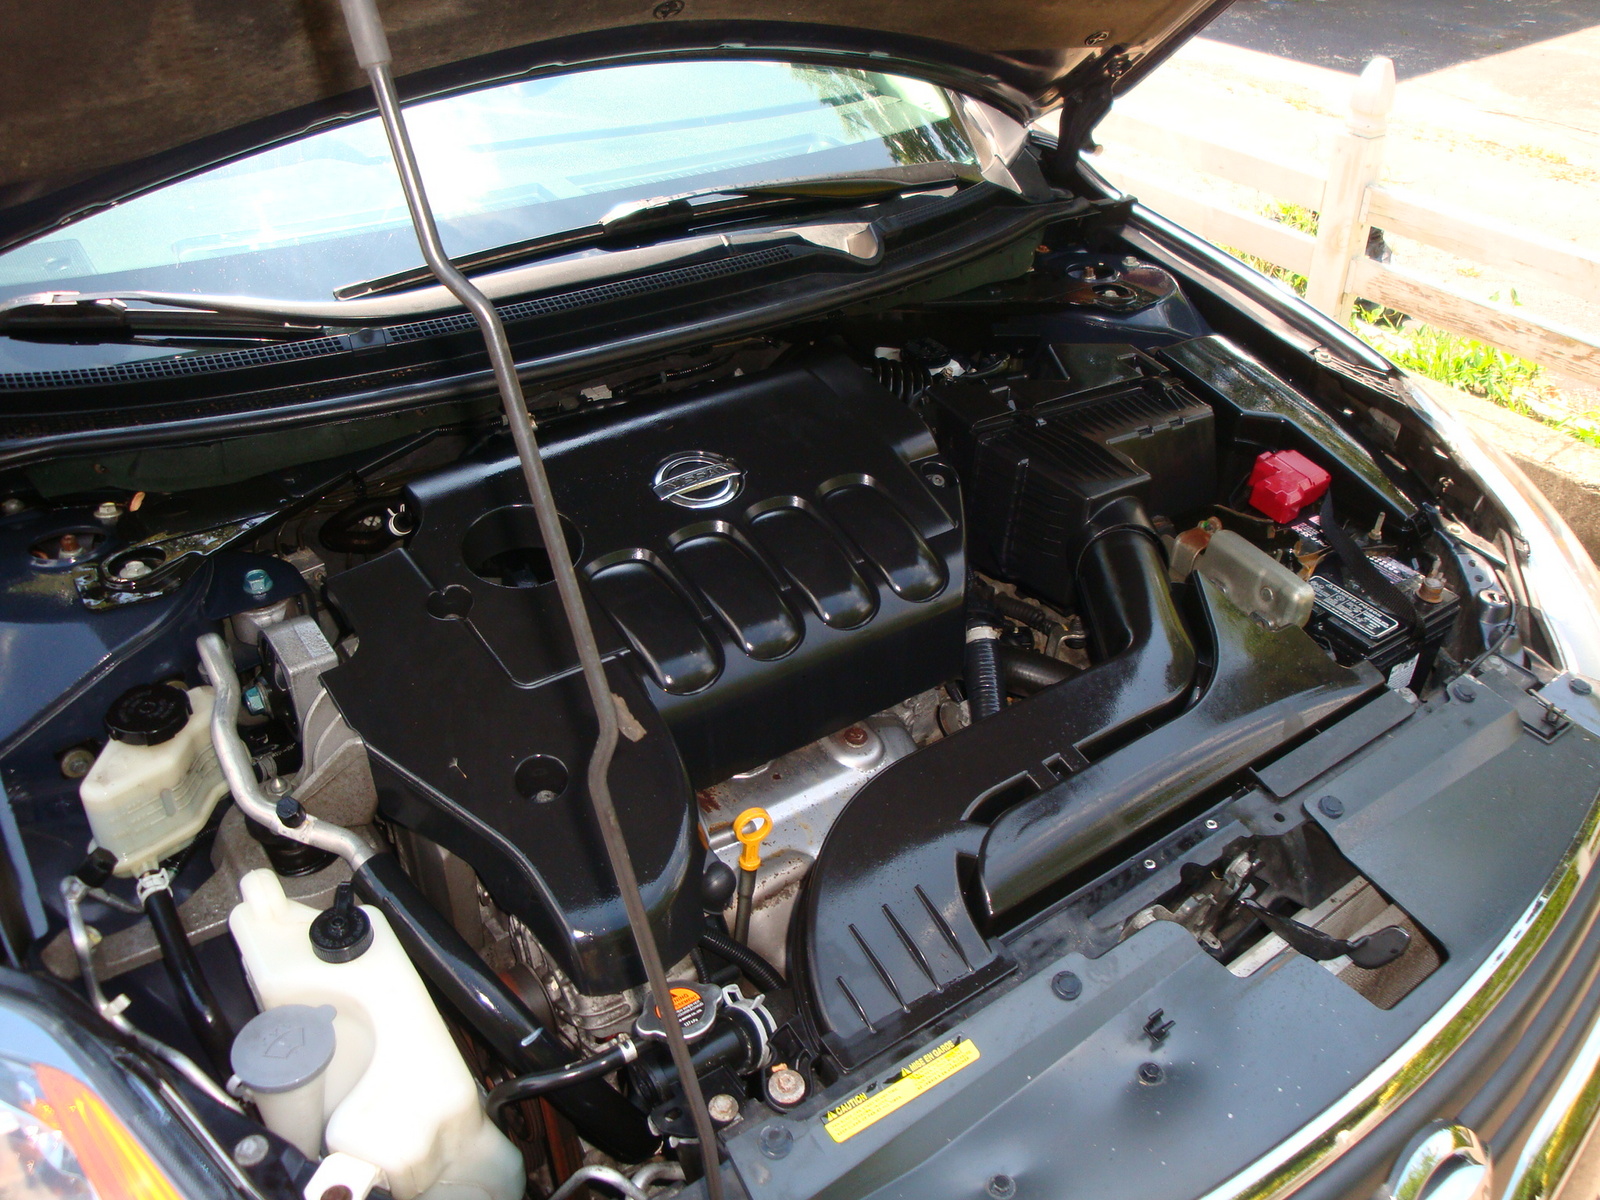 2005 Nissan altima manual transmission problems #4